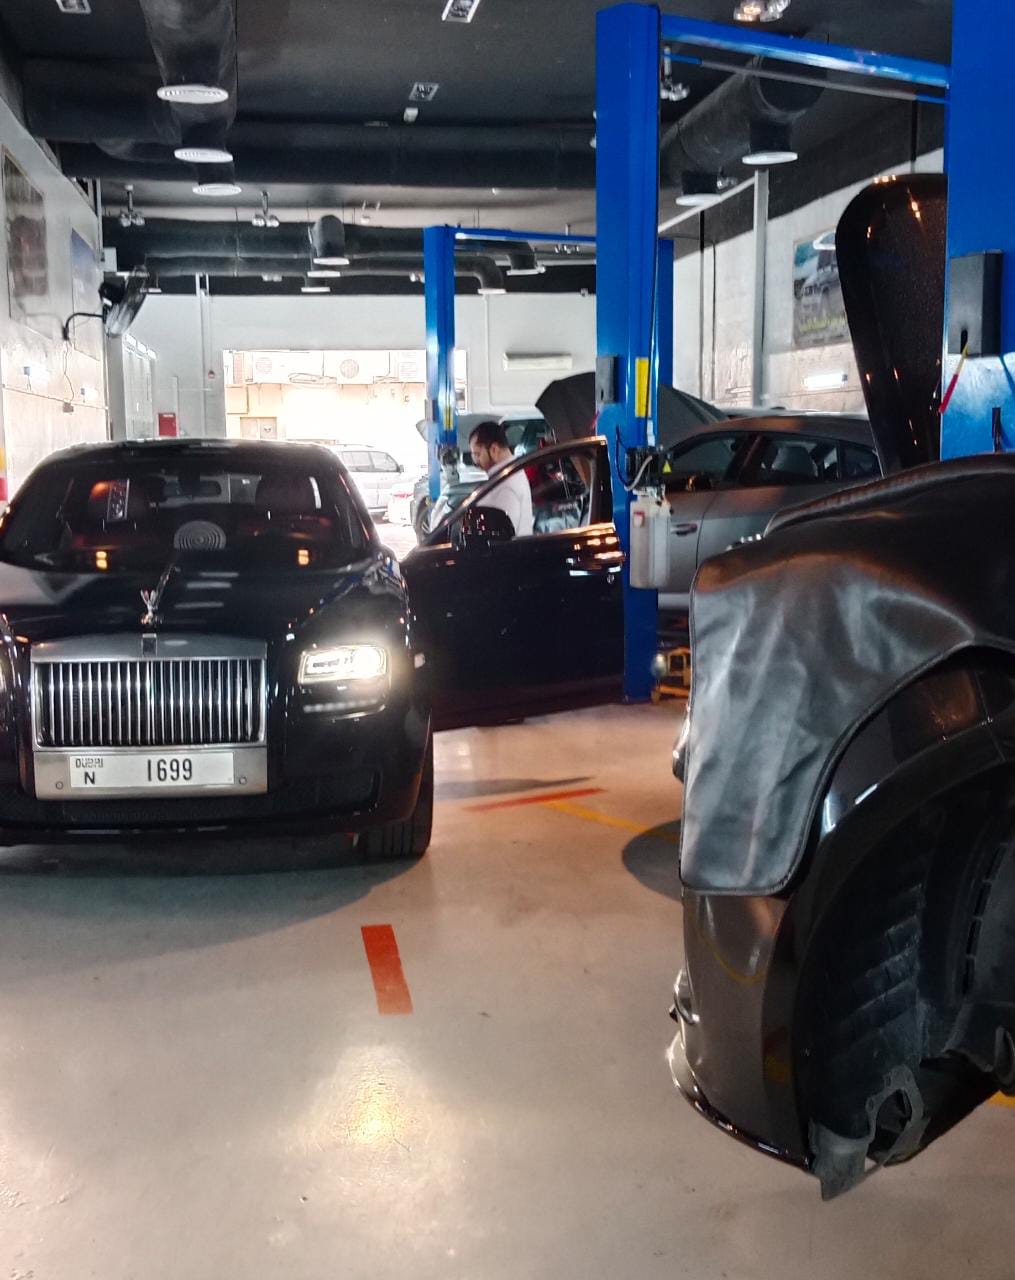 Range Rover Maintenance Service Center In Dubai